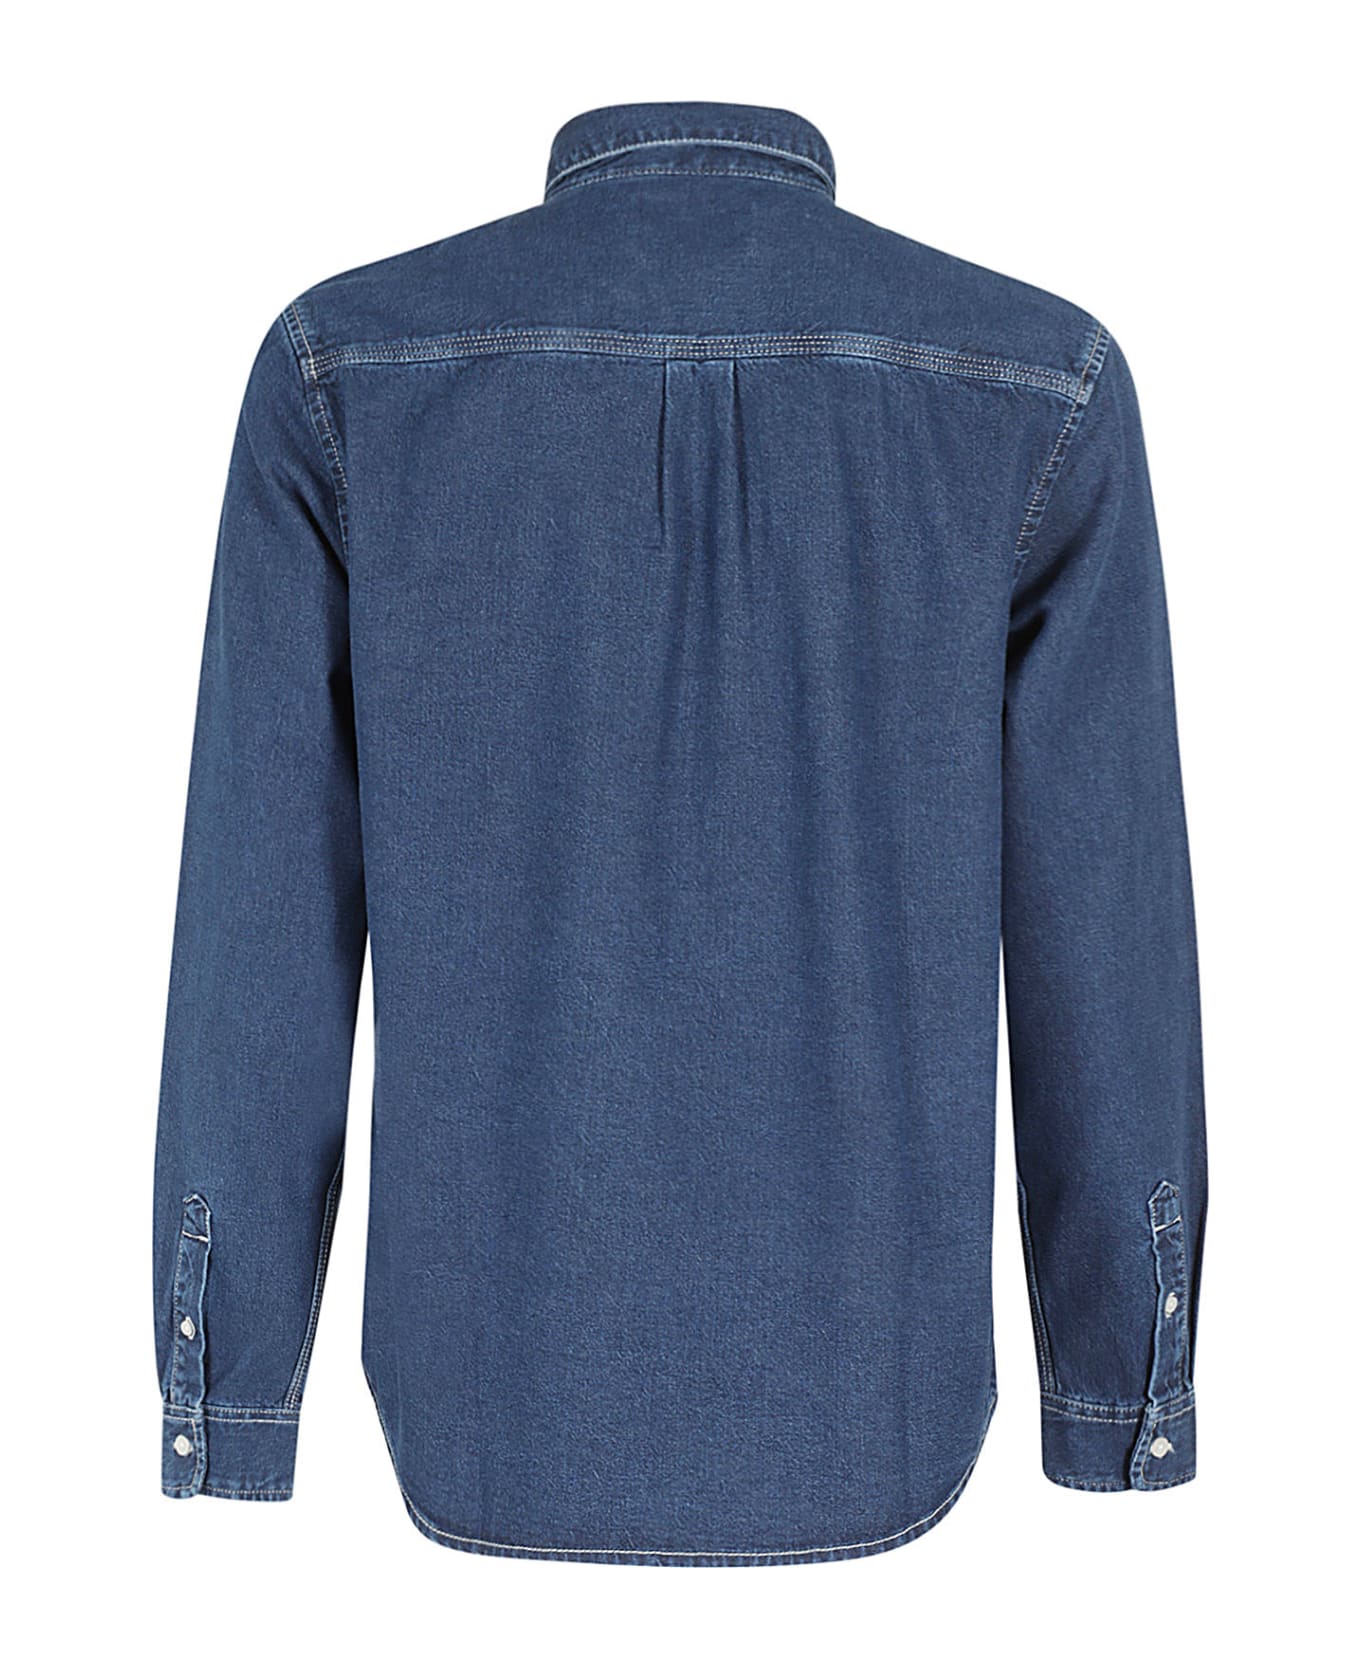 Carhartt 'l/s Weldon' Shirt - Blue Stone Washed シャツ